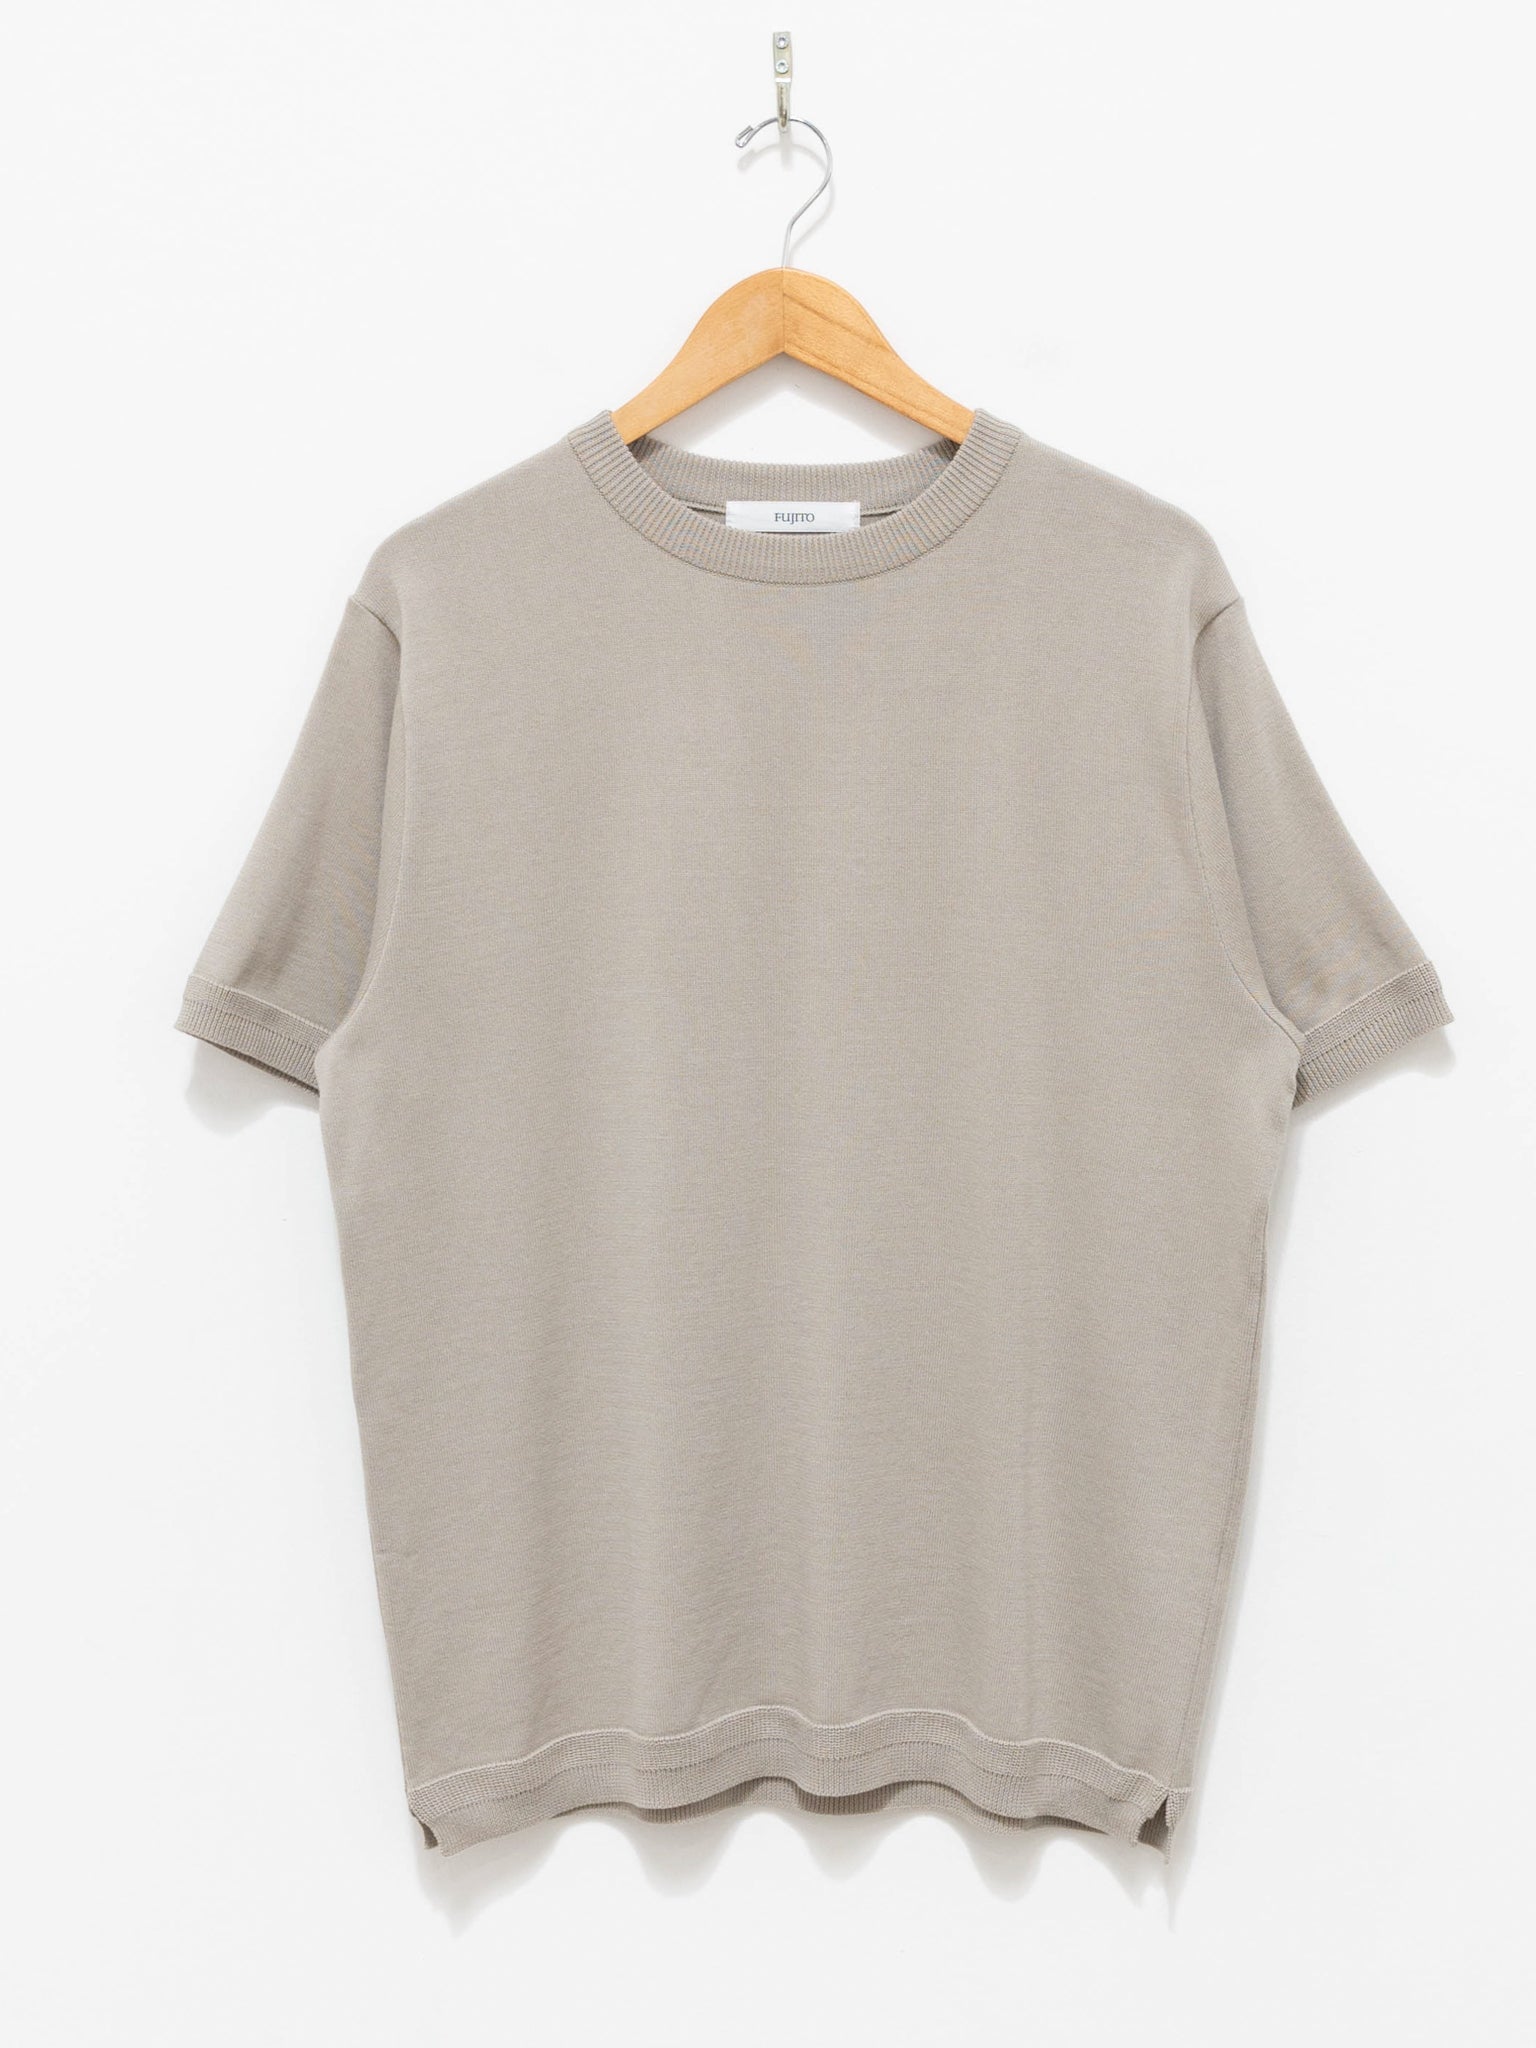 Namu Shop - Fujito Knit T-Shirt - Greige